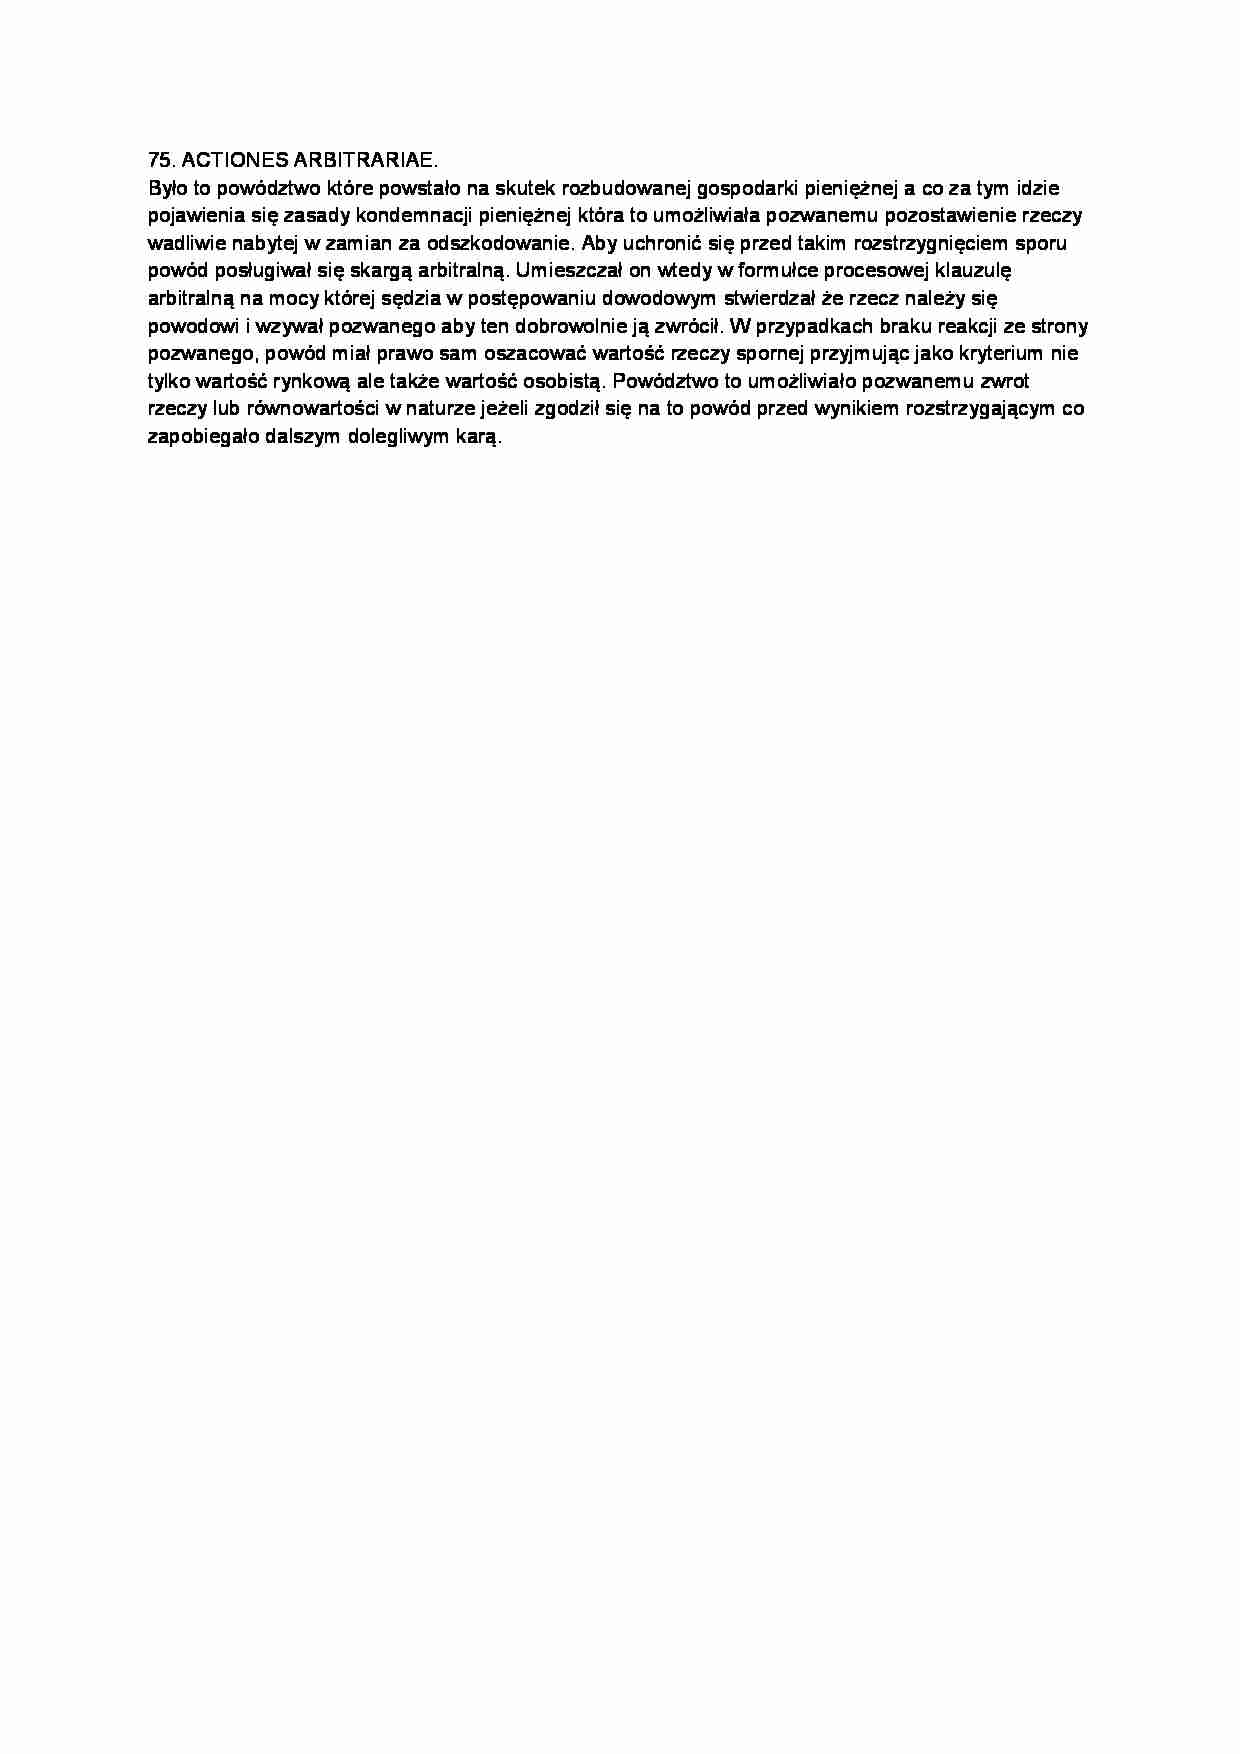 Aactiones arbitrariae-opracowanie - strona 1